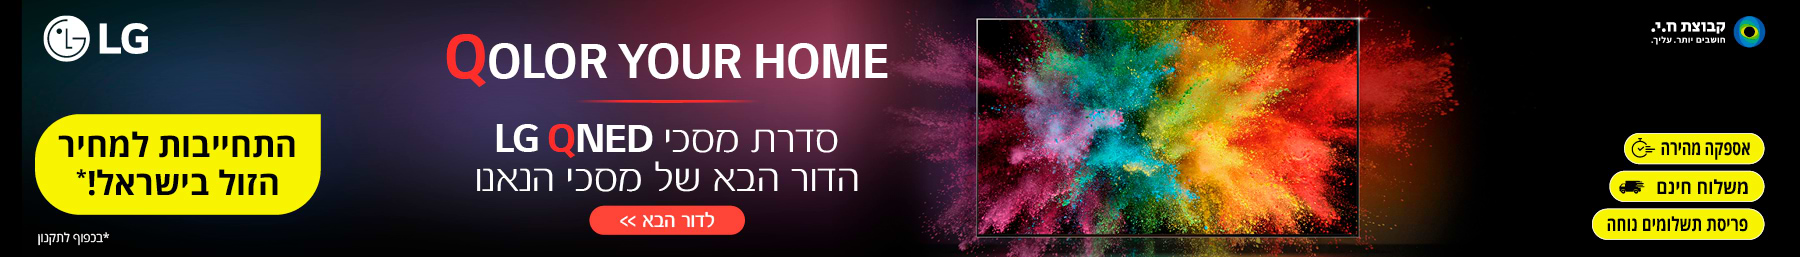 LG Qolor your home סדרת מסכי LG QNED הדור הבא של מסכי הנאנו התחייבות למחיר הטוב בישראל!* אספקה מהירה | פריסת תשלומים נוחה | משלוח חינם. *בכפוף לתקנון